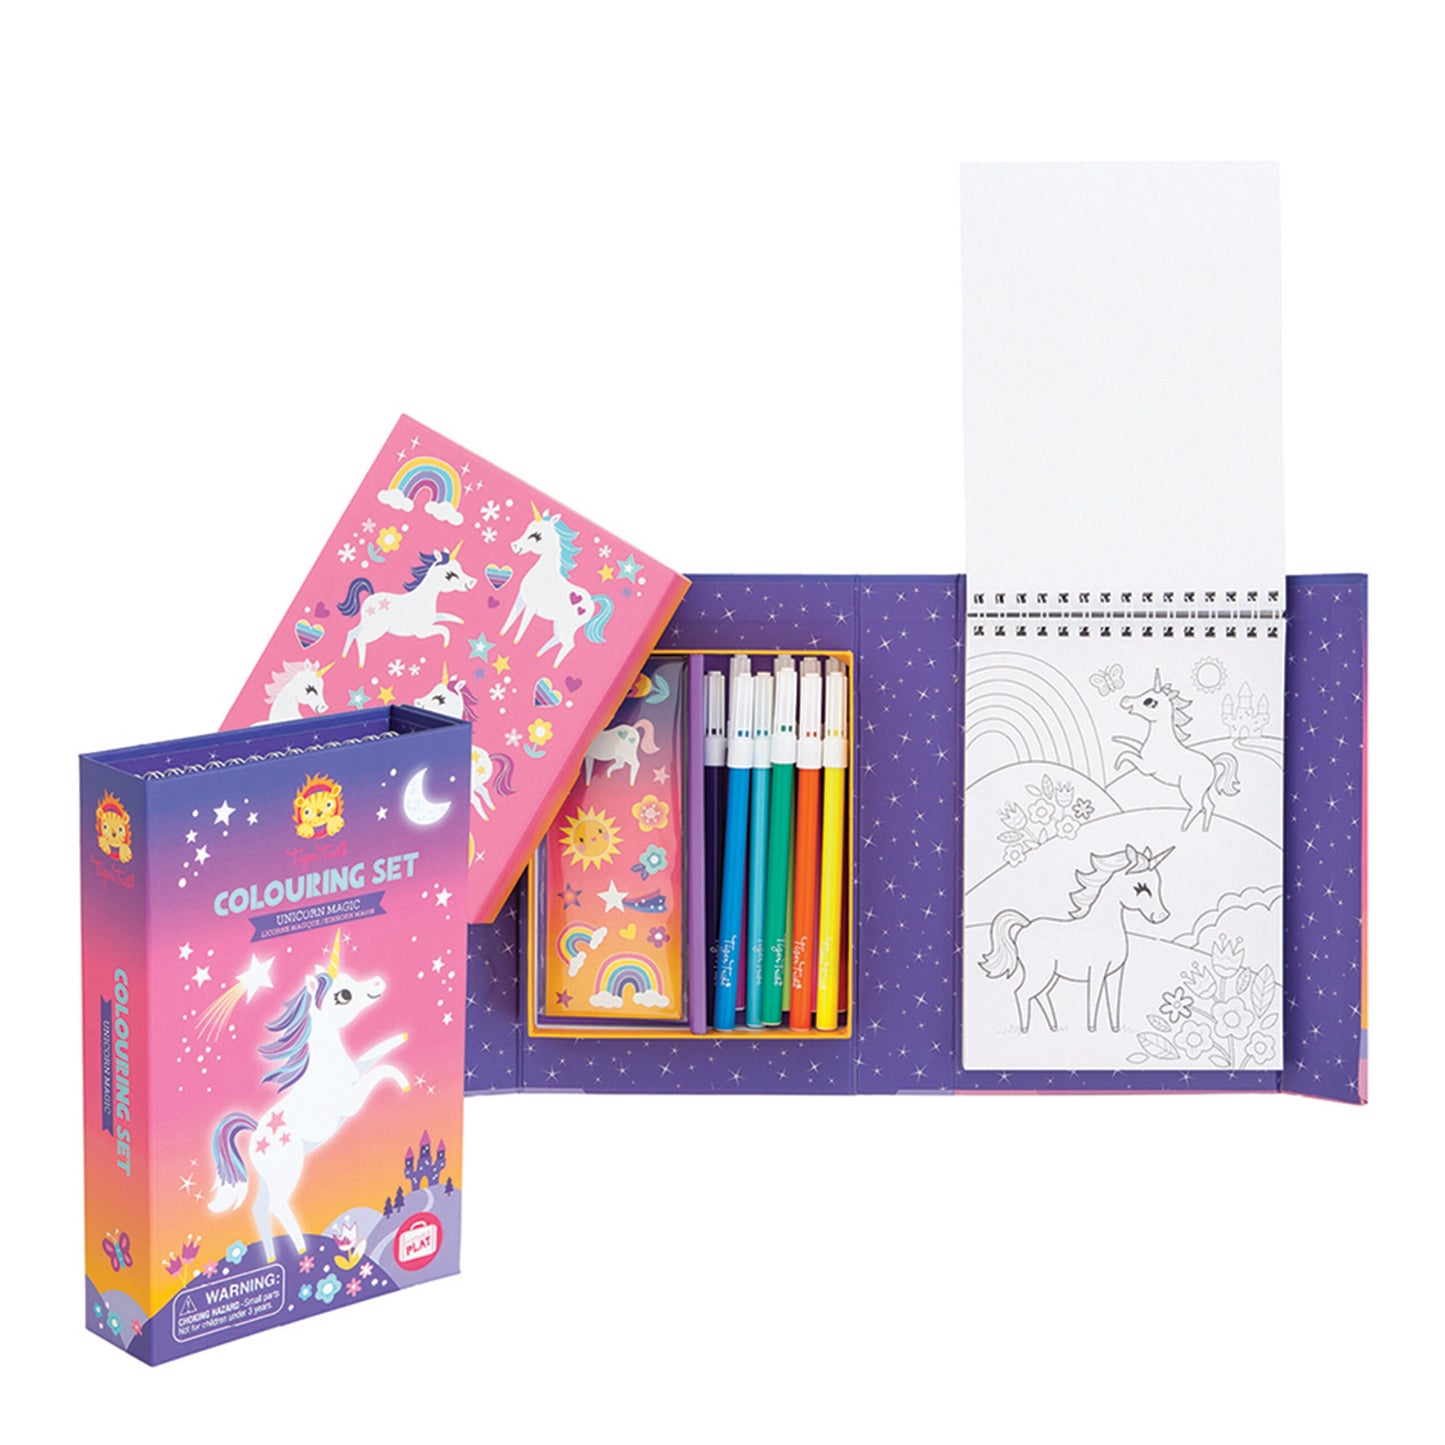 Unicorn magic colouring set